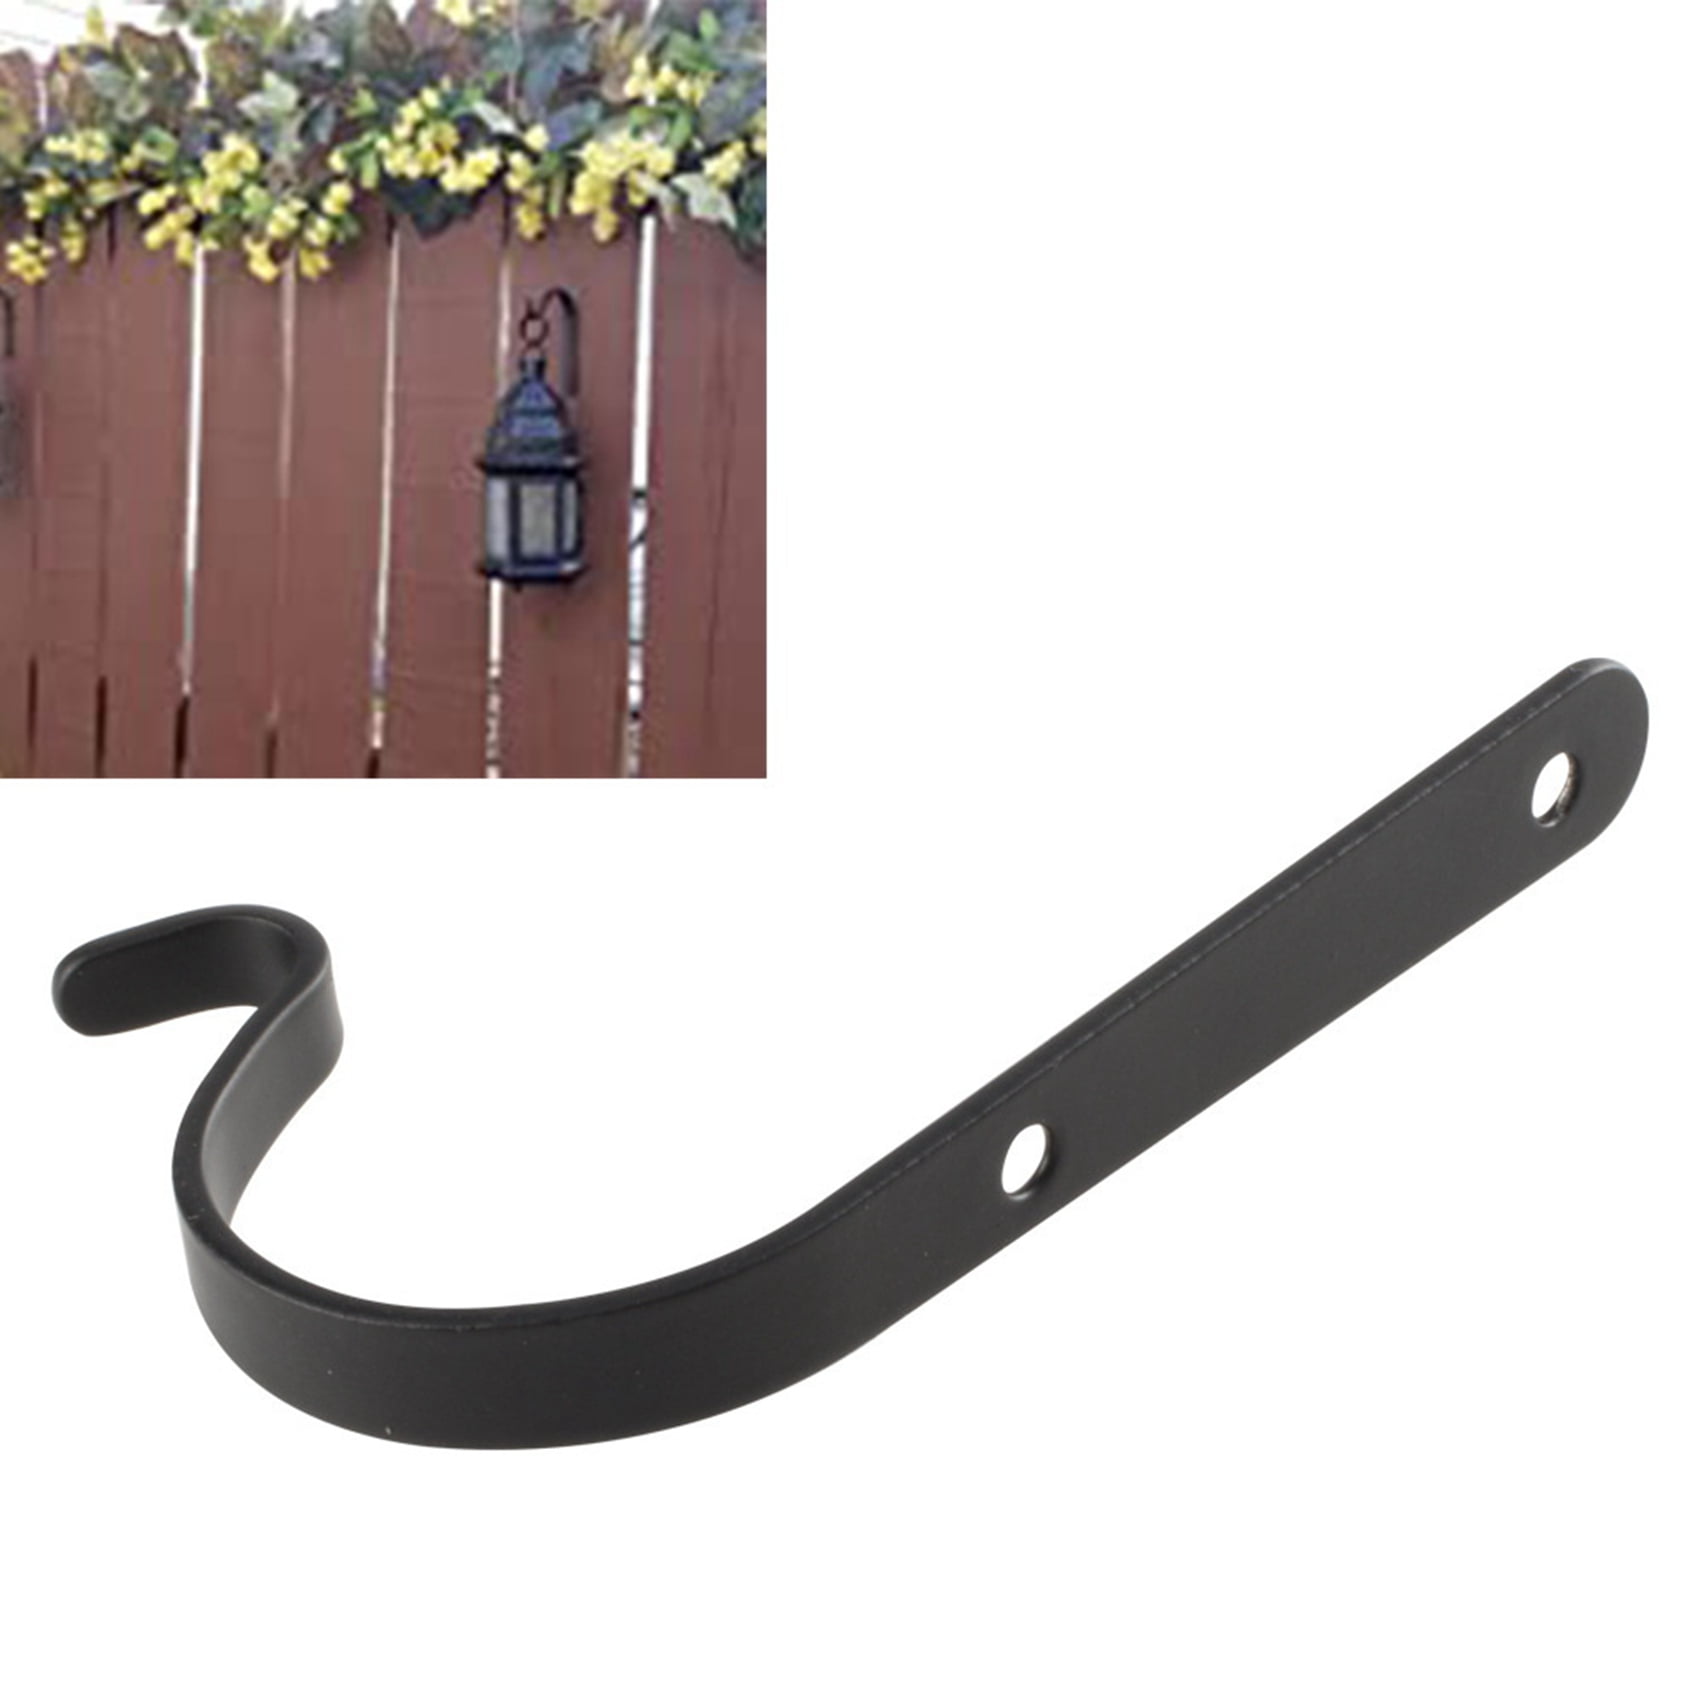 4/10 Pcs Iron Wall Hooks Outdoor Decorative Hook For Hanging Planter Black Z0I3 